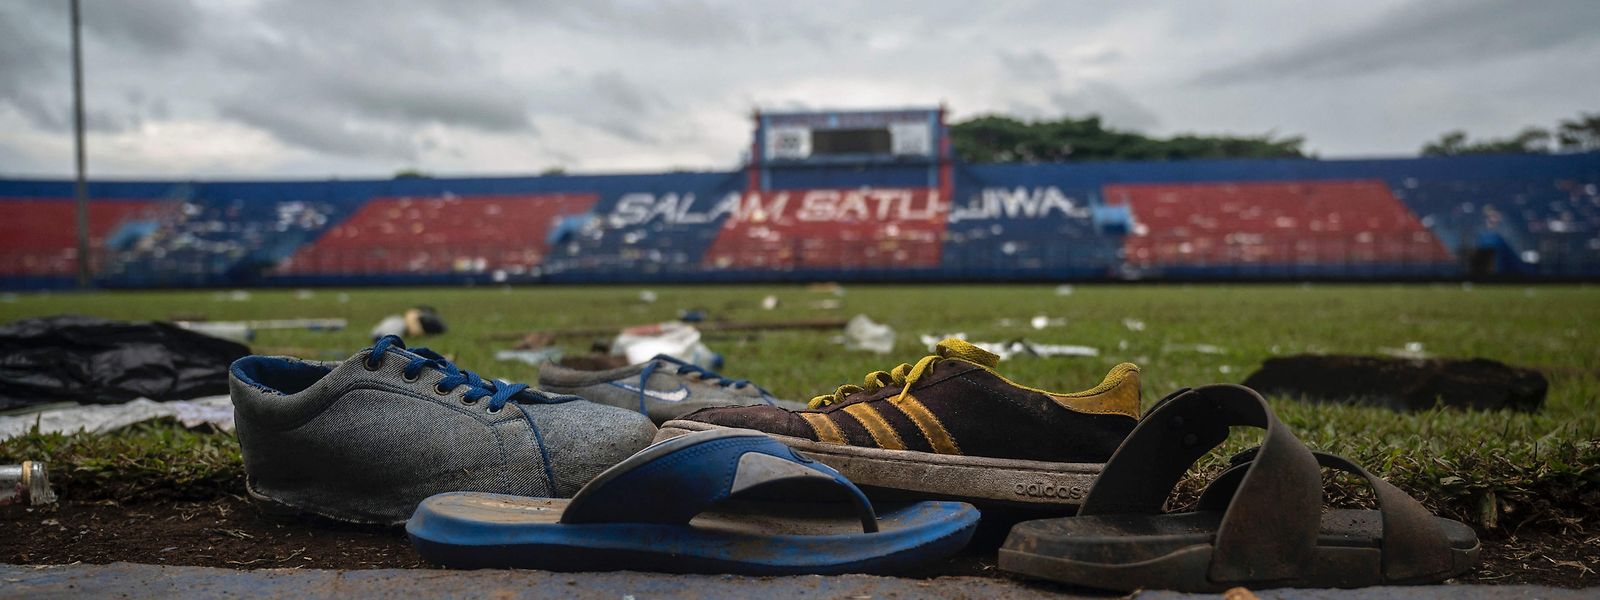 Verlorene Schuhe liegen am Spielfeldrand des Kanjuruhan-Stadions in Malang - dem Ort der Tragödie.